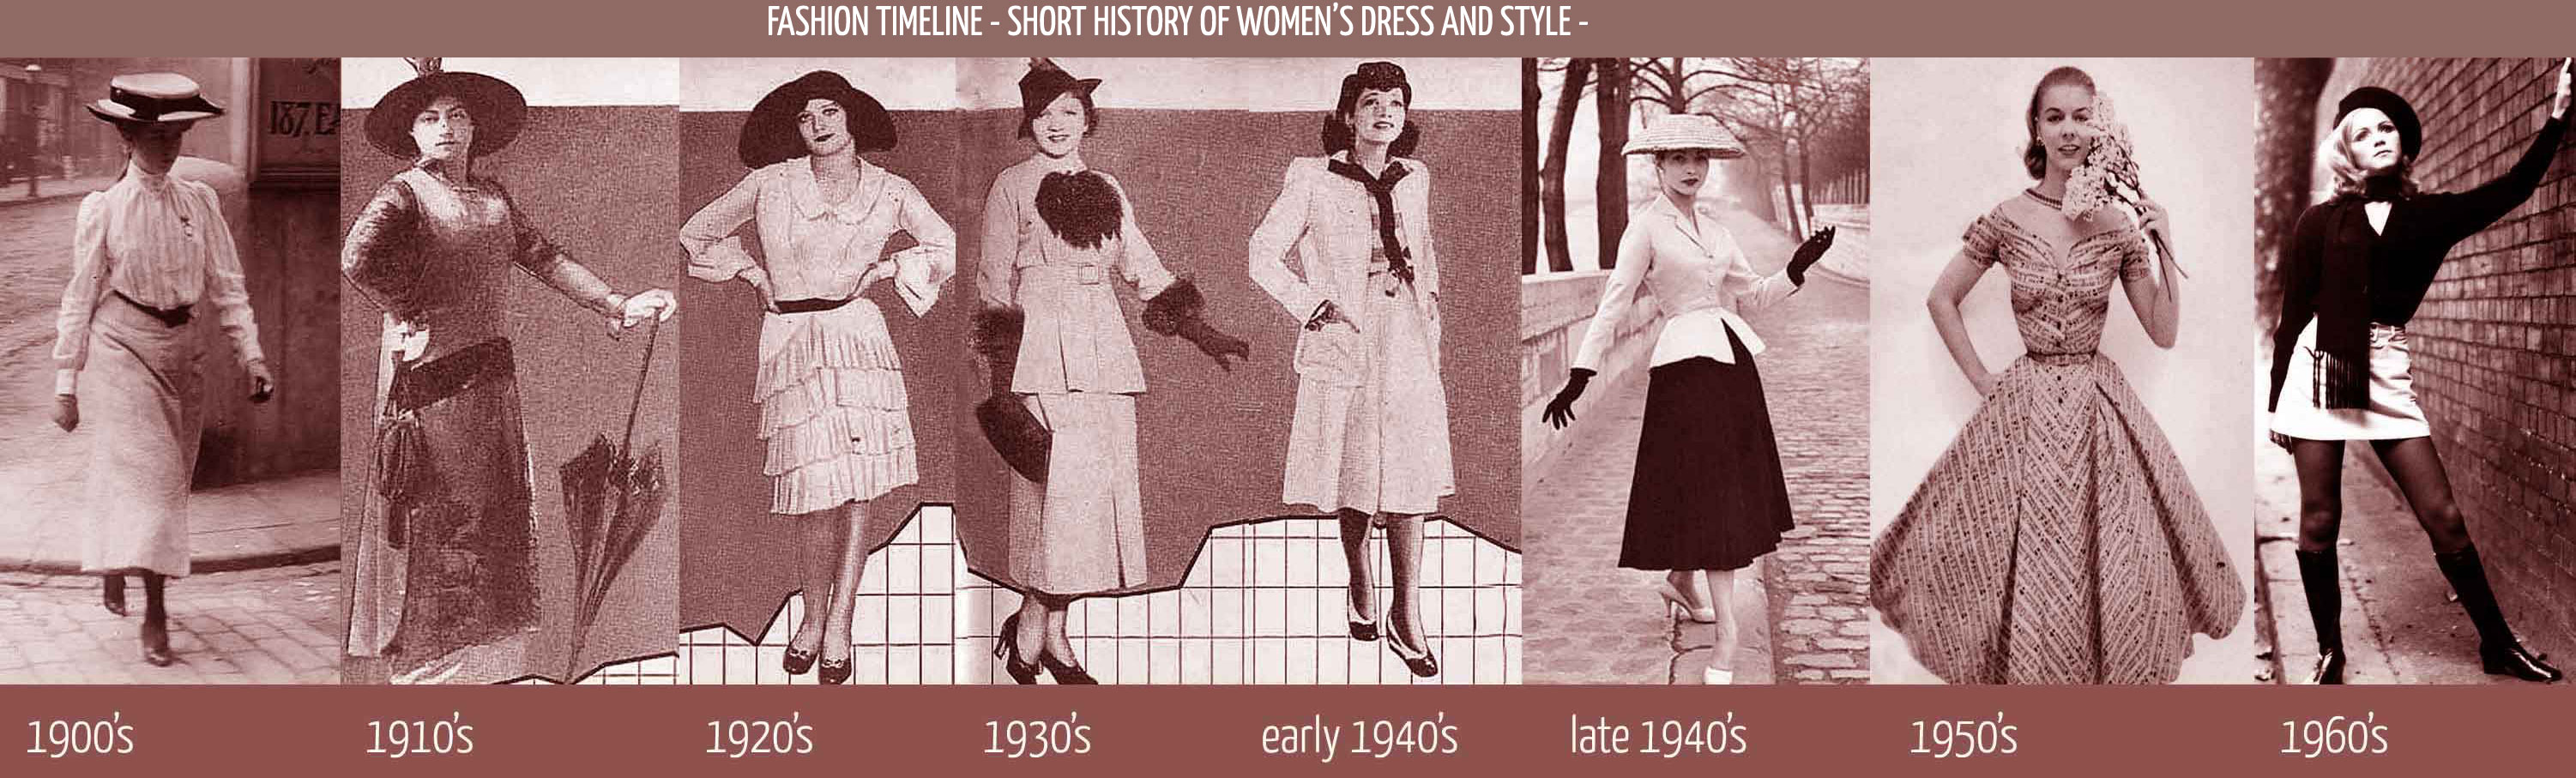 Fashion Timeline and Hemline Index -1900 to 1970 - Illustration